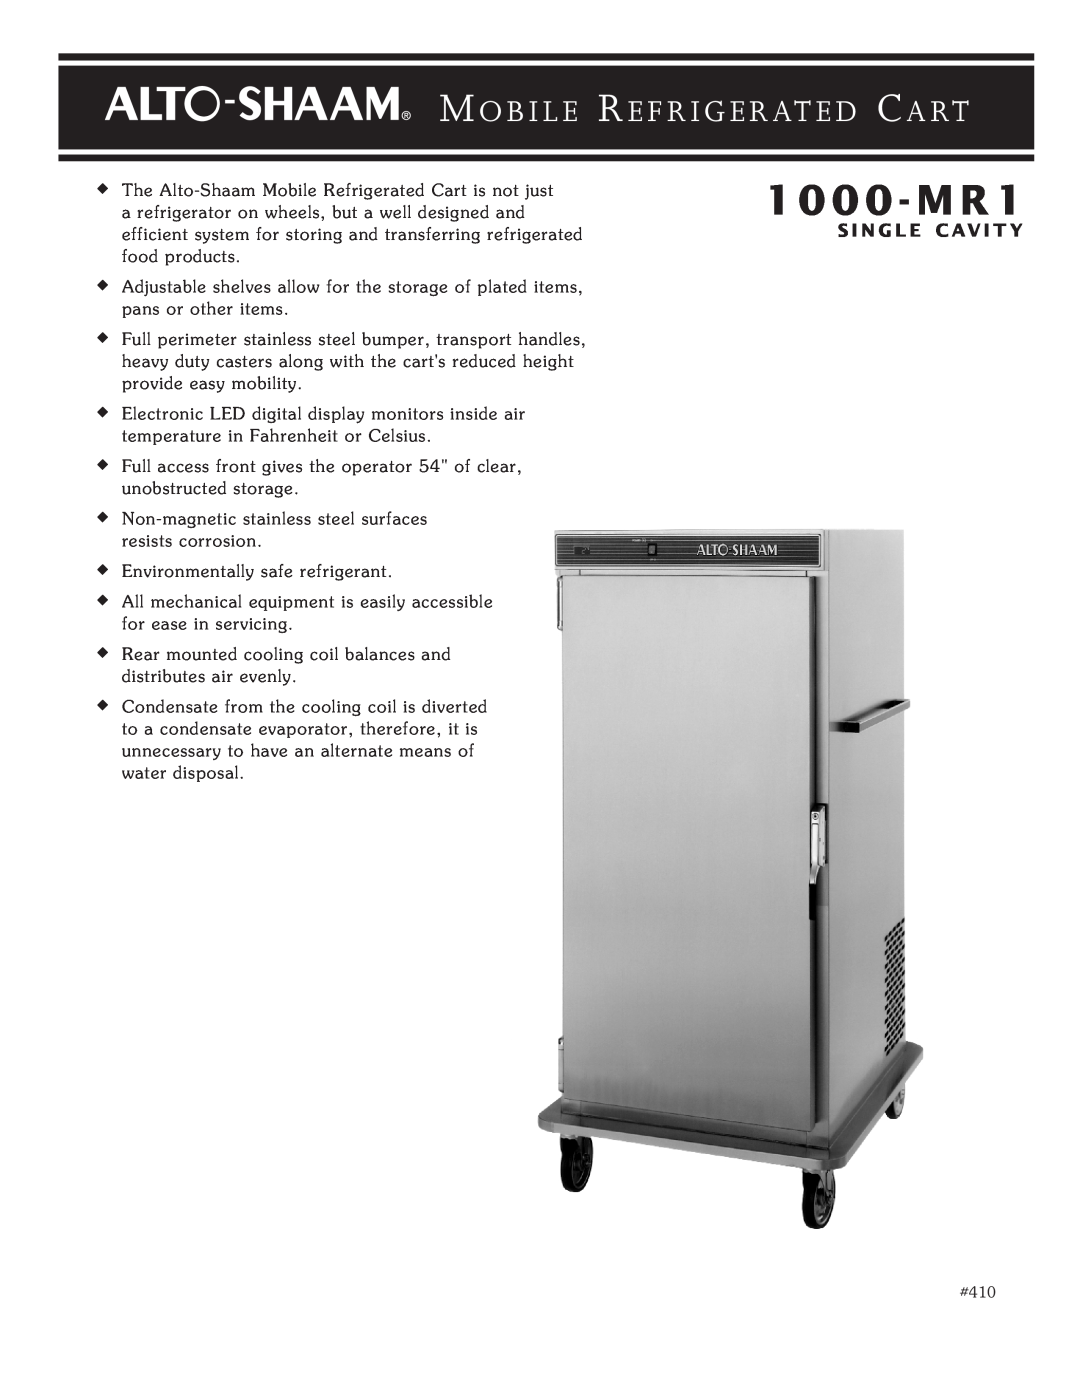 Alto-Shaam movile refrigerated cart single comartment manual PHONE 262.251.3800 800.558.8744 USA/CANADA, 1000-MR1, Model 